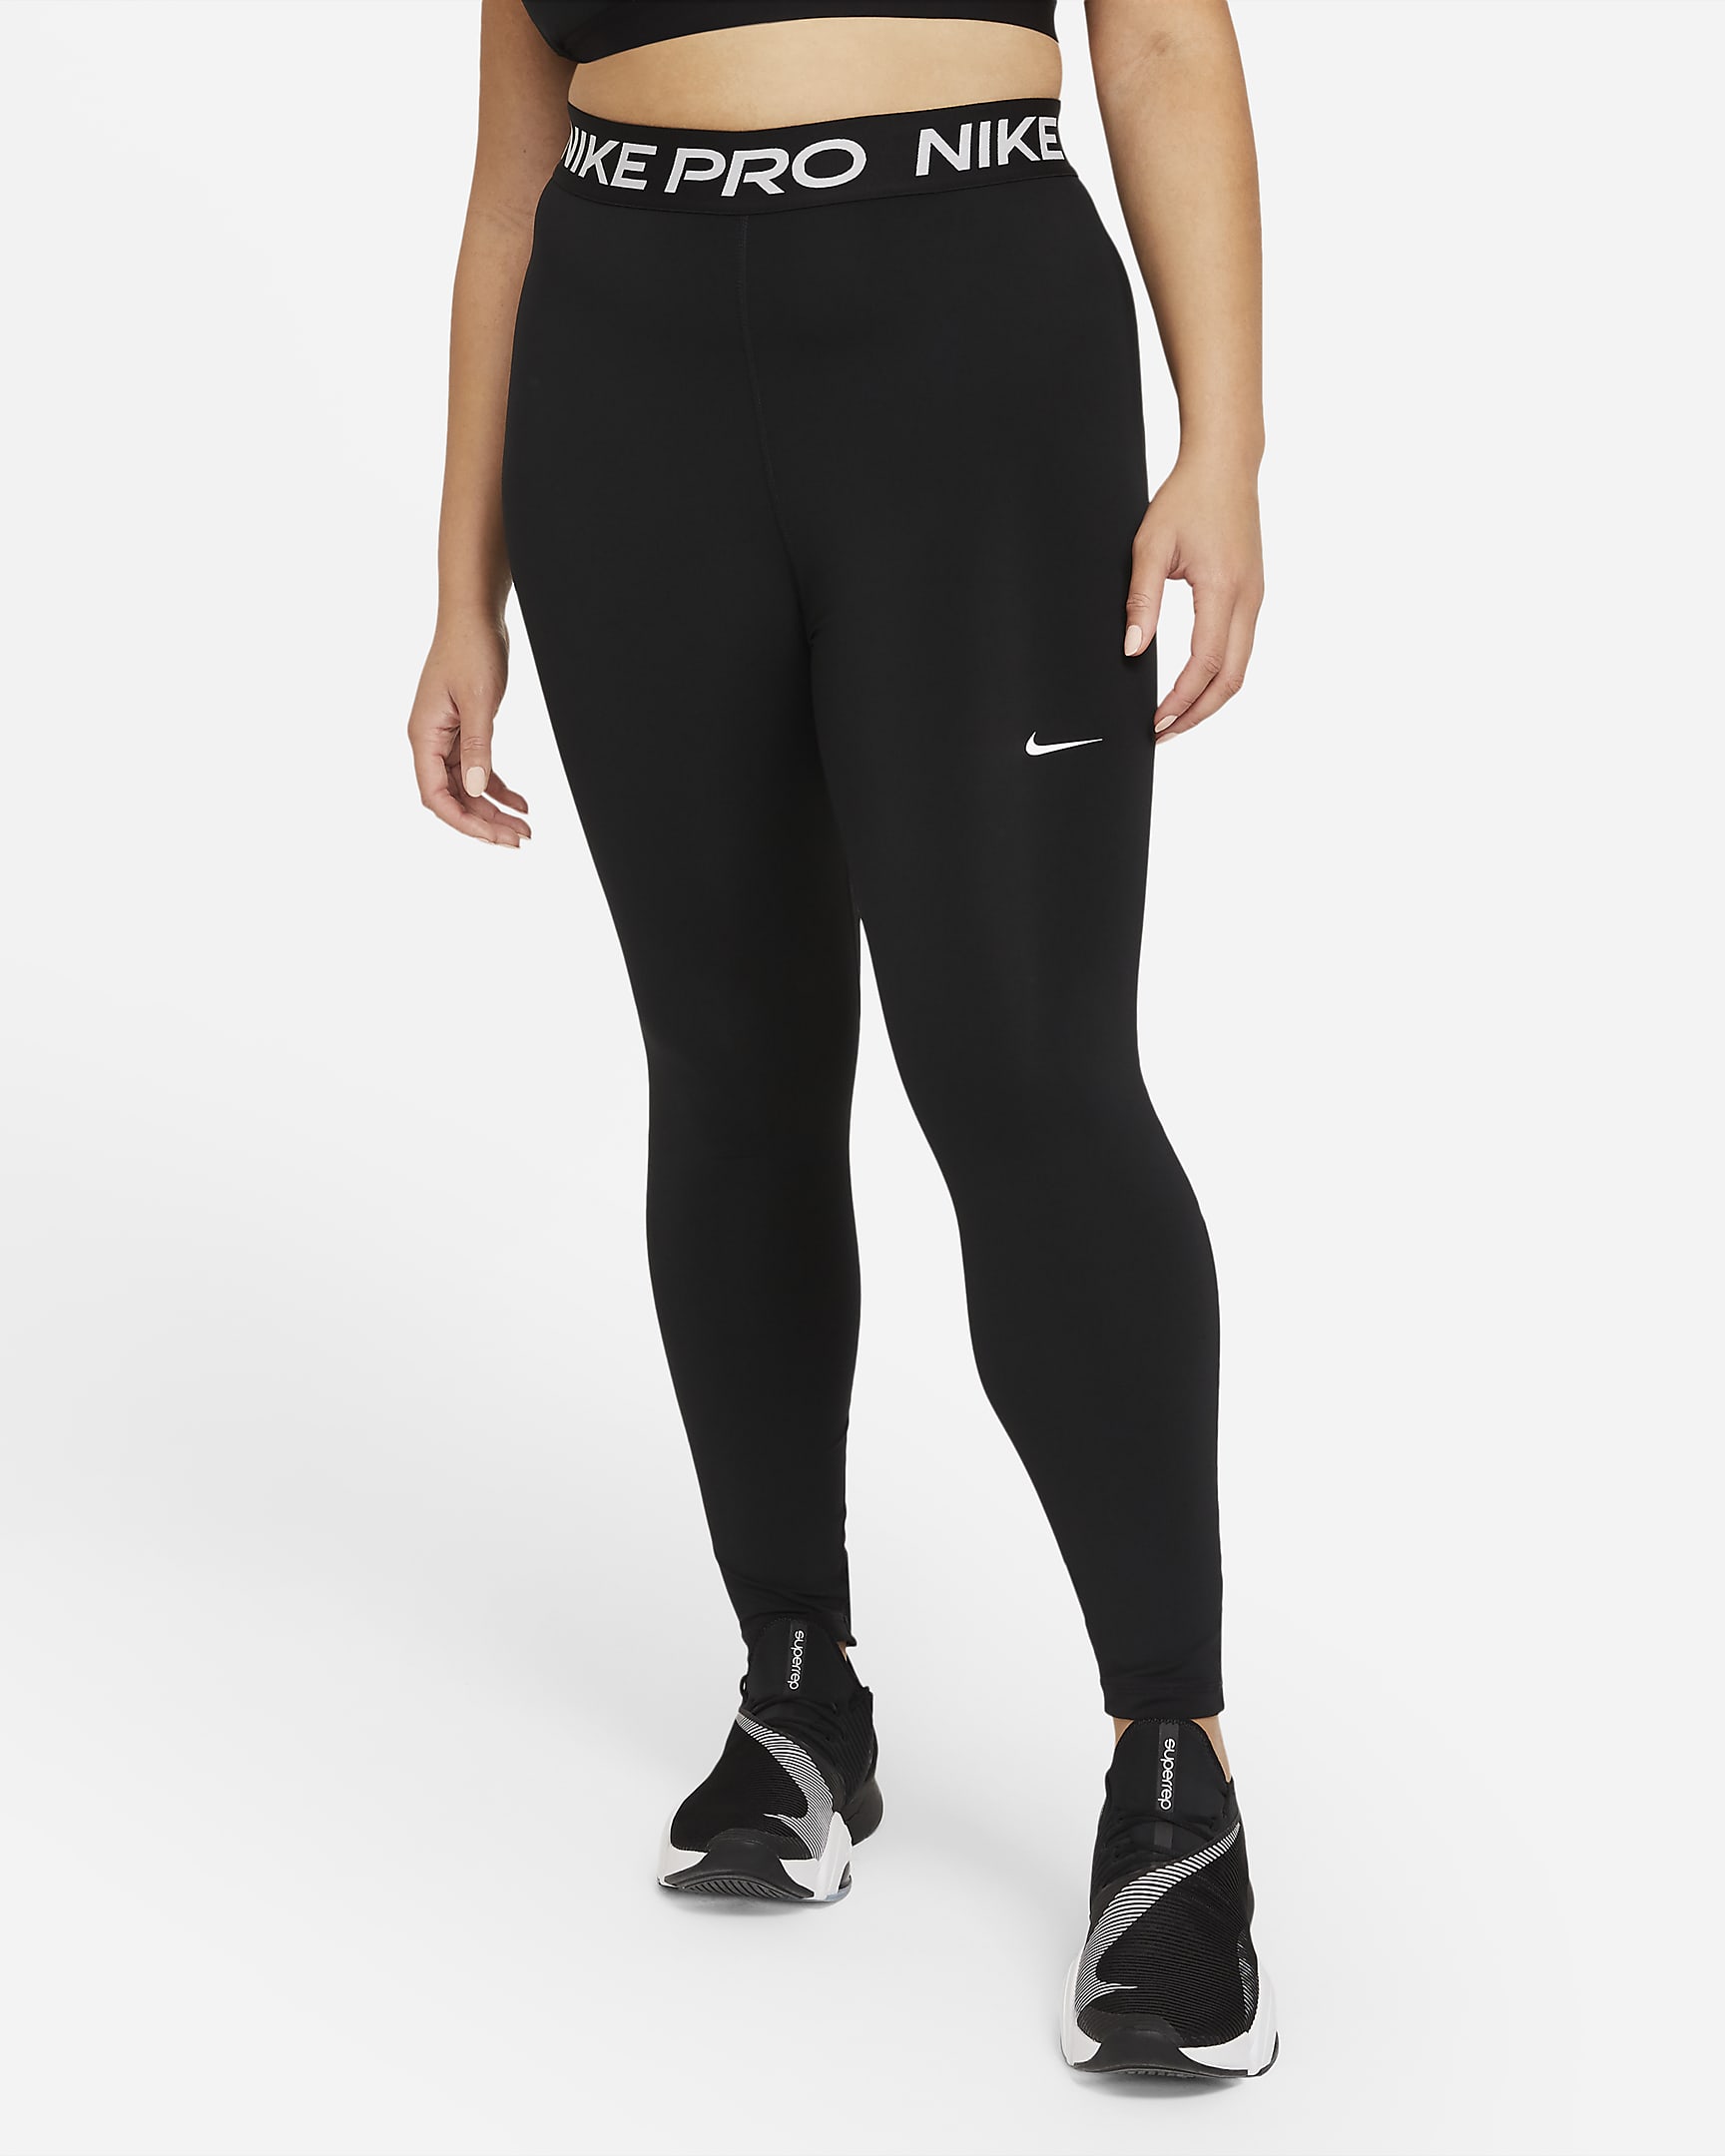 Nike Pro 365 Women's Leggings (Plus Size) - Black/White